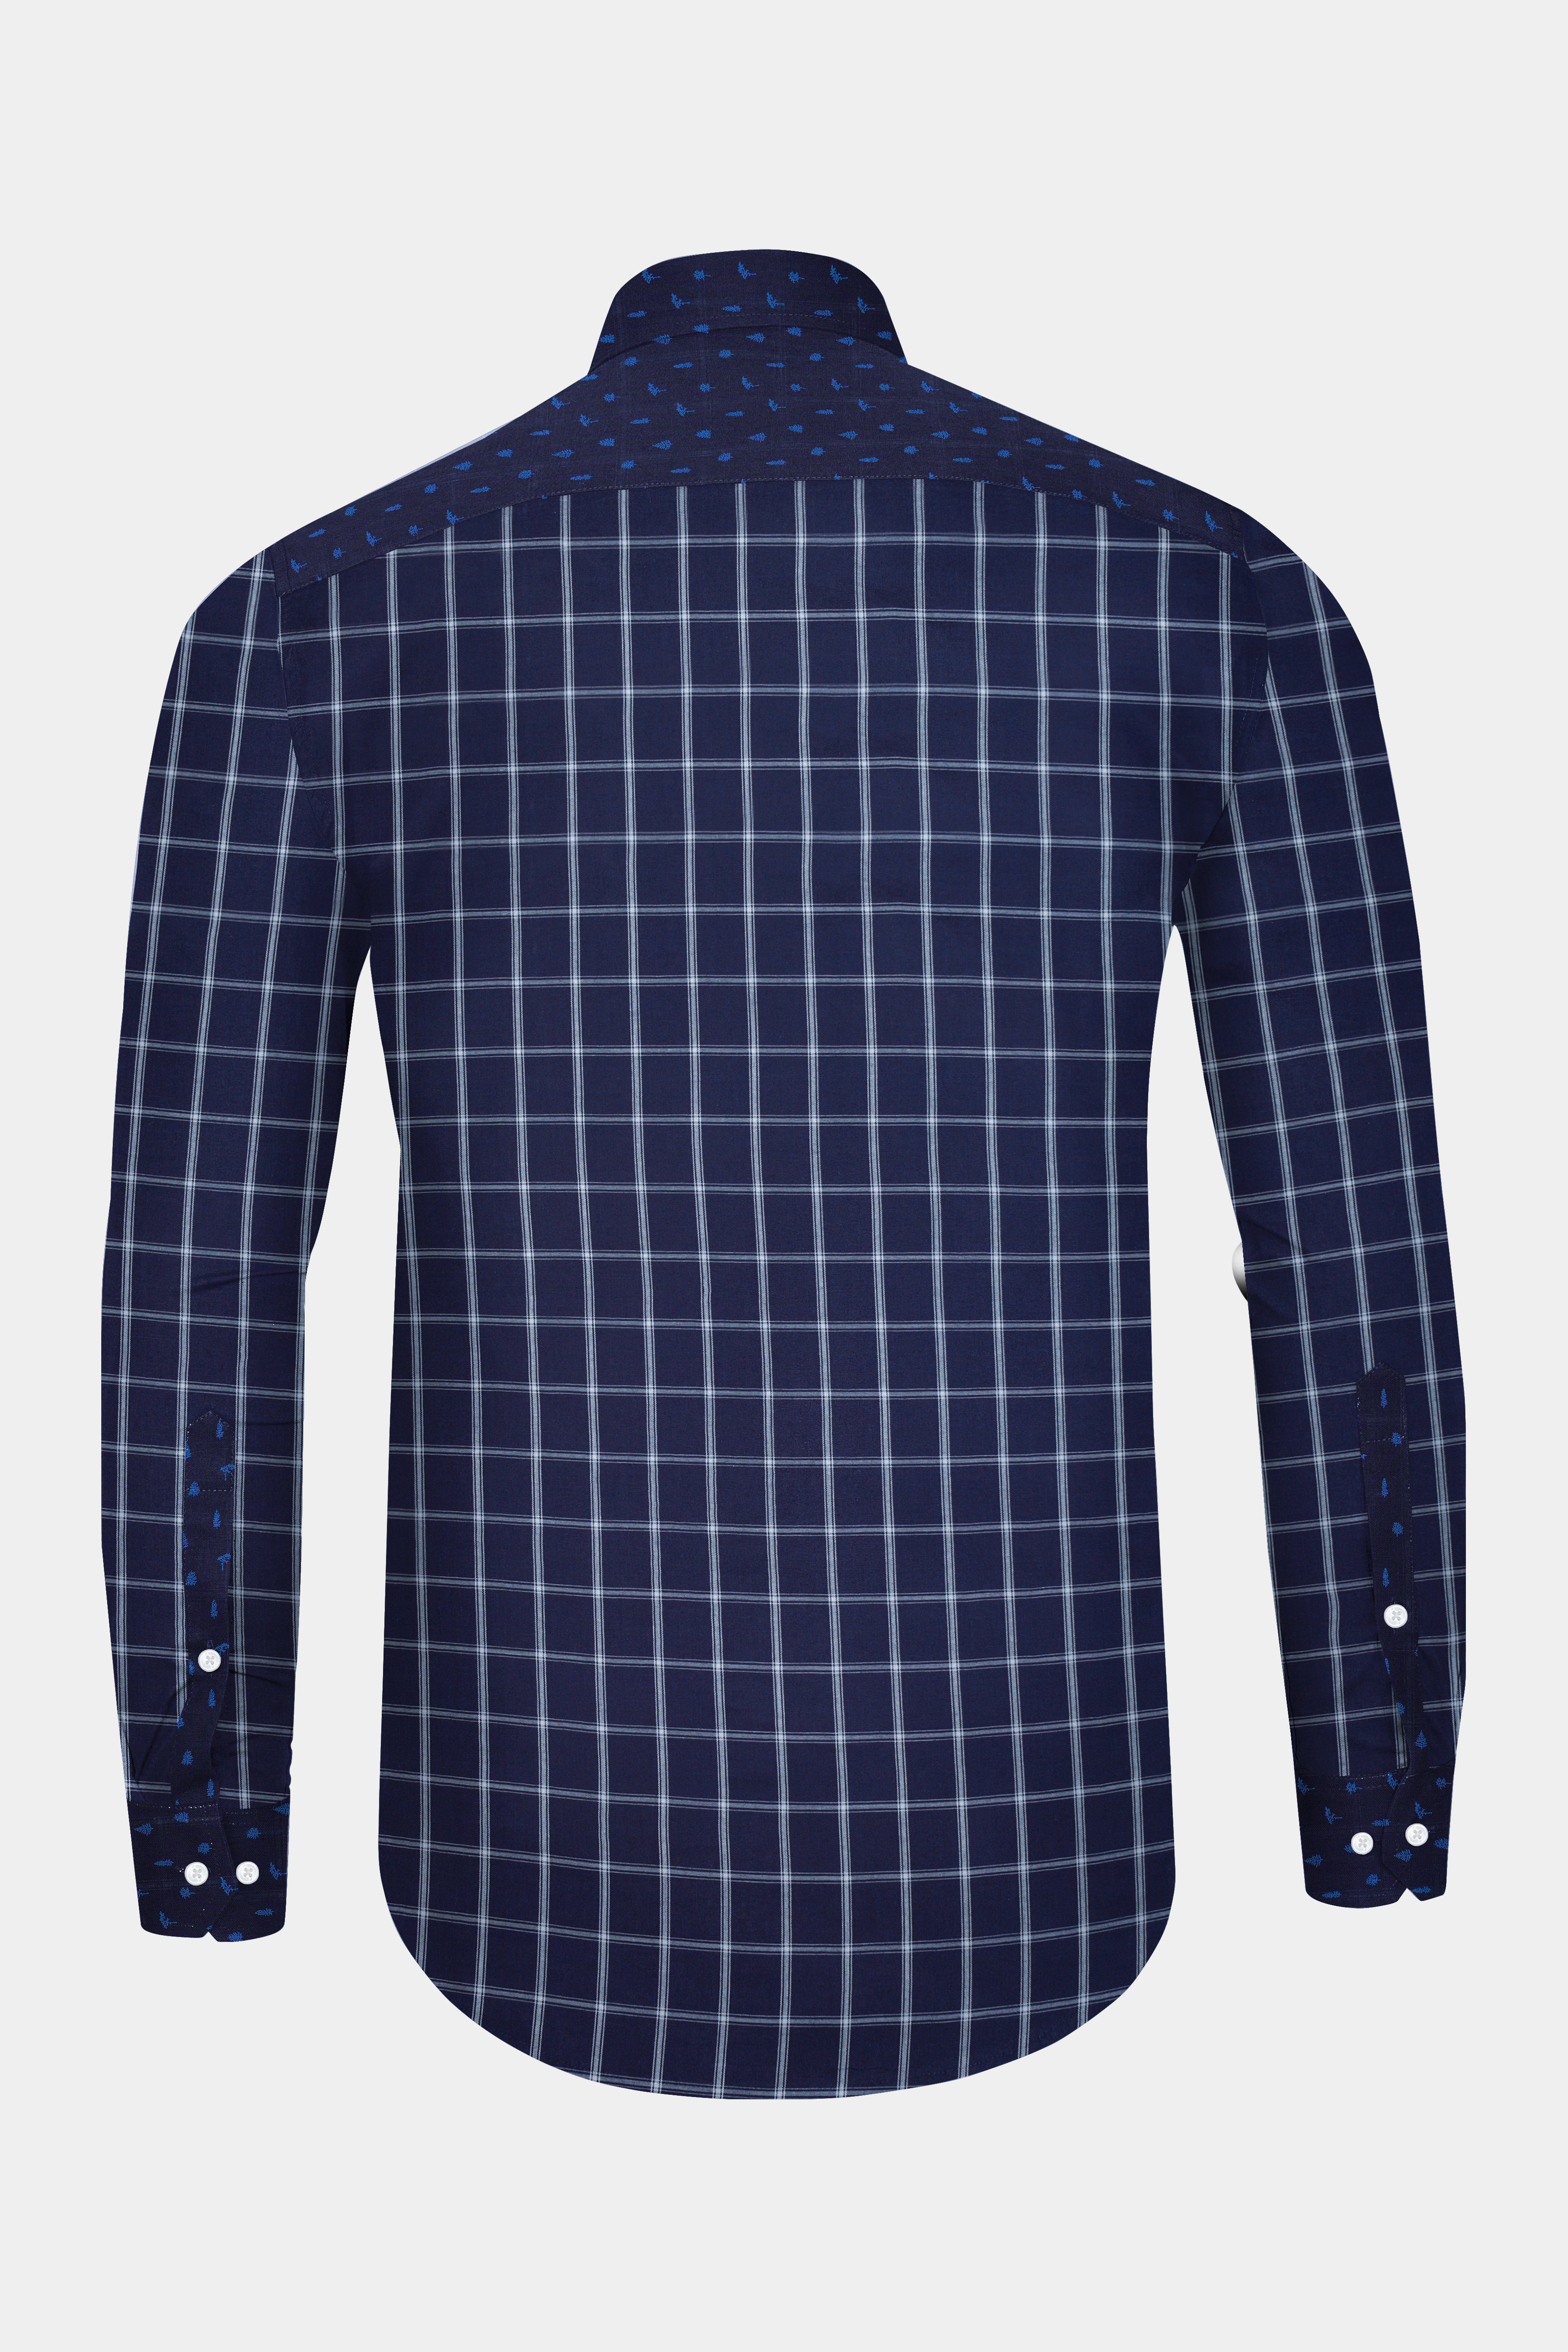 Mirage Blue checkered pattern Chambray Designer Shirt